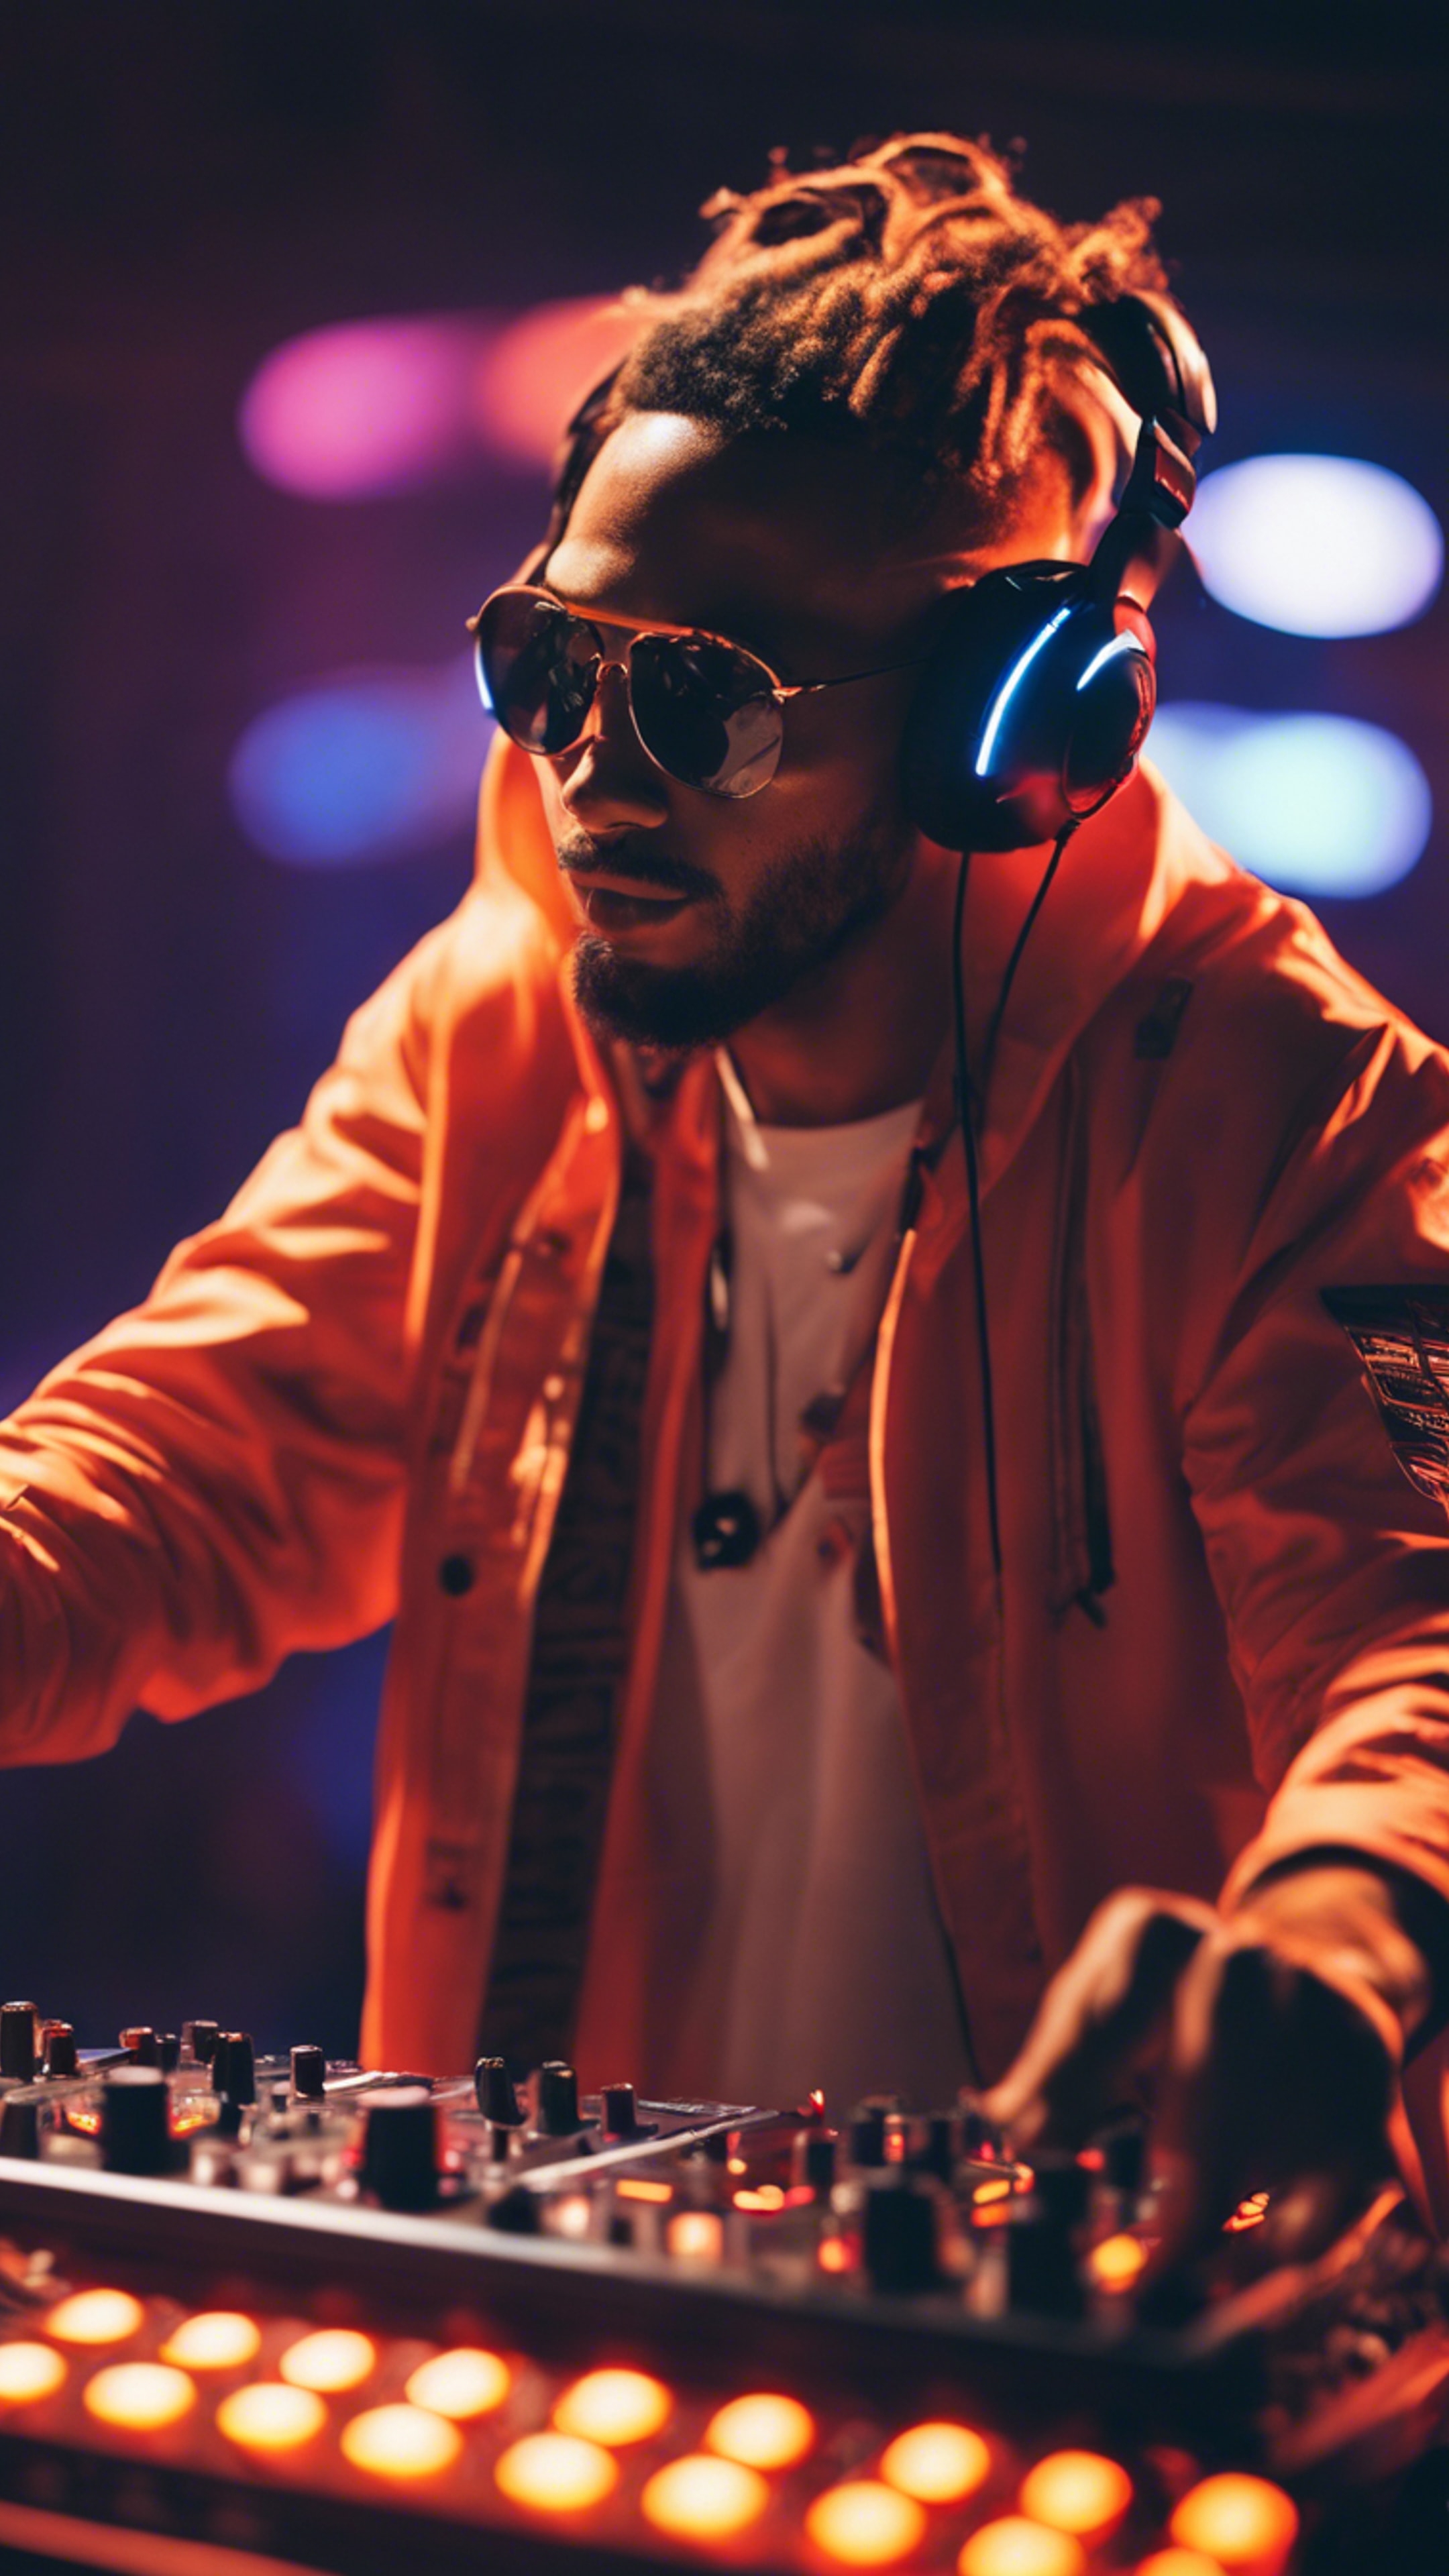 An energetic DJ at a music festival wearing neon orange headphones. Papel de parede[135547dc2eef4b3588bf]